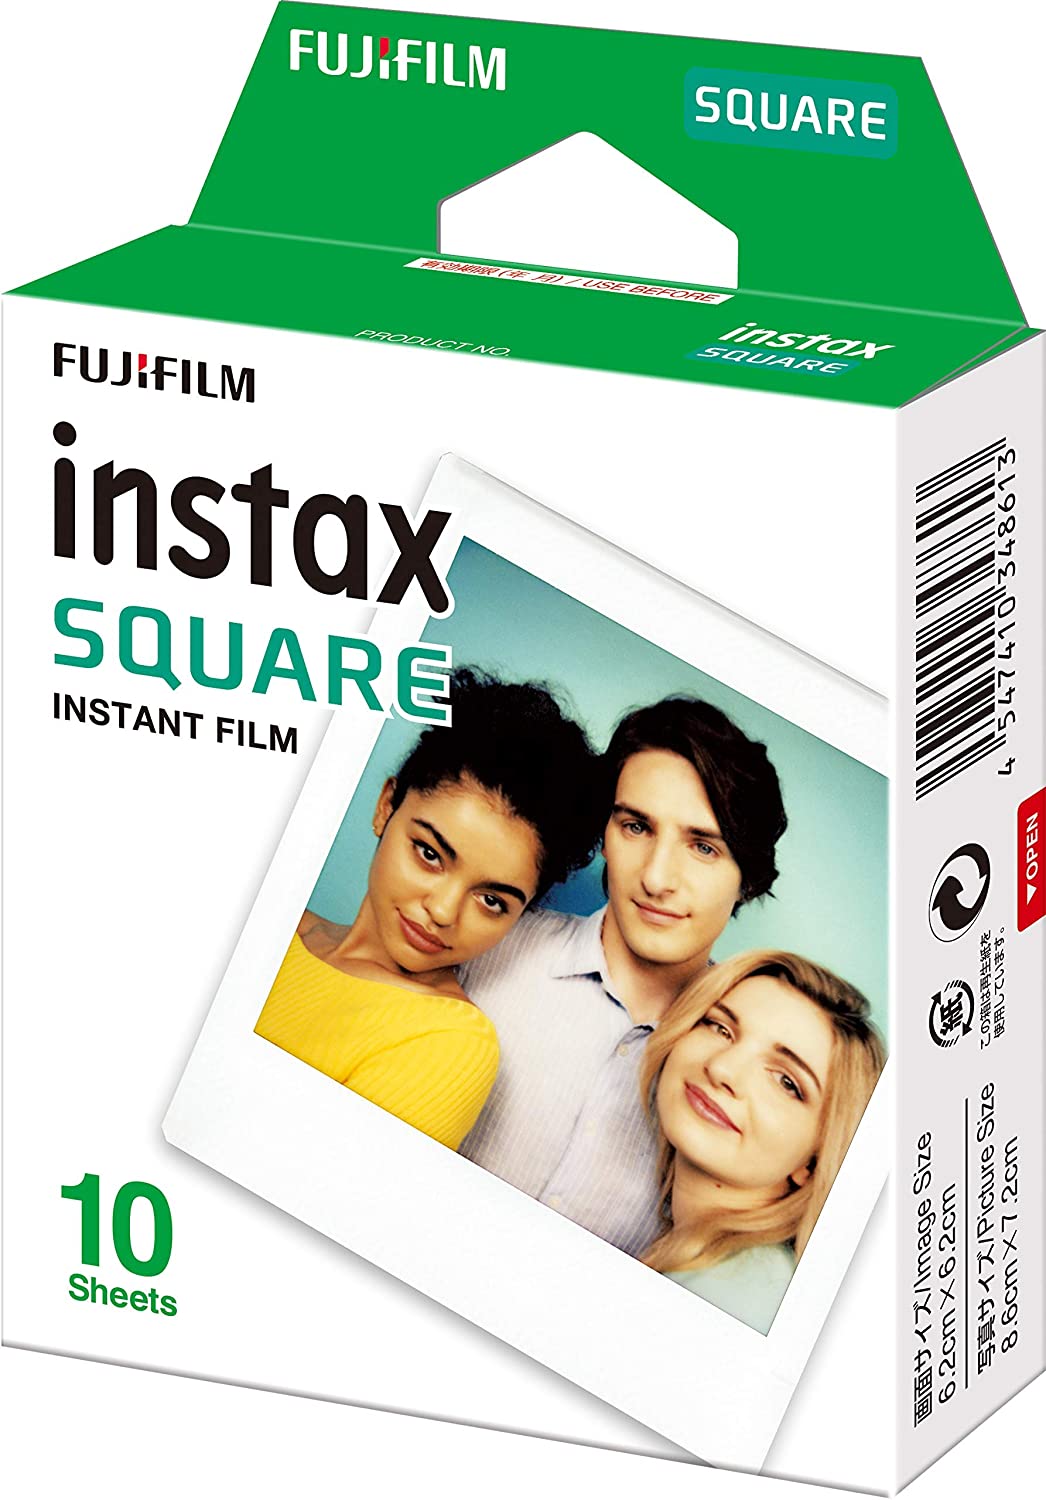 Fujifilm Instax Square Film single pack (£8.99 incl VAT)